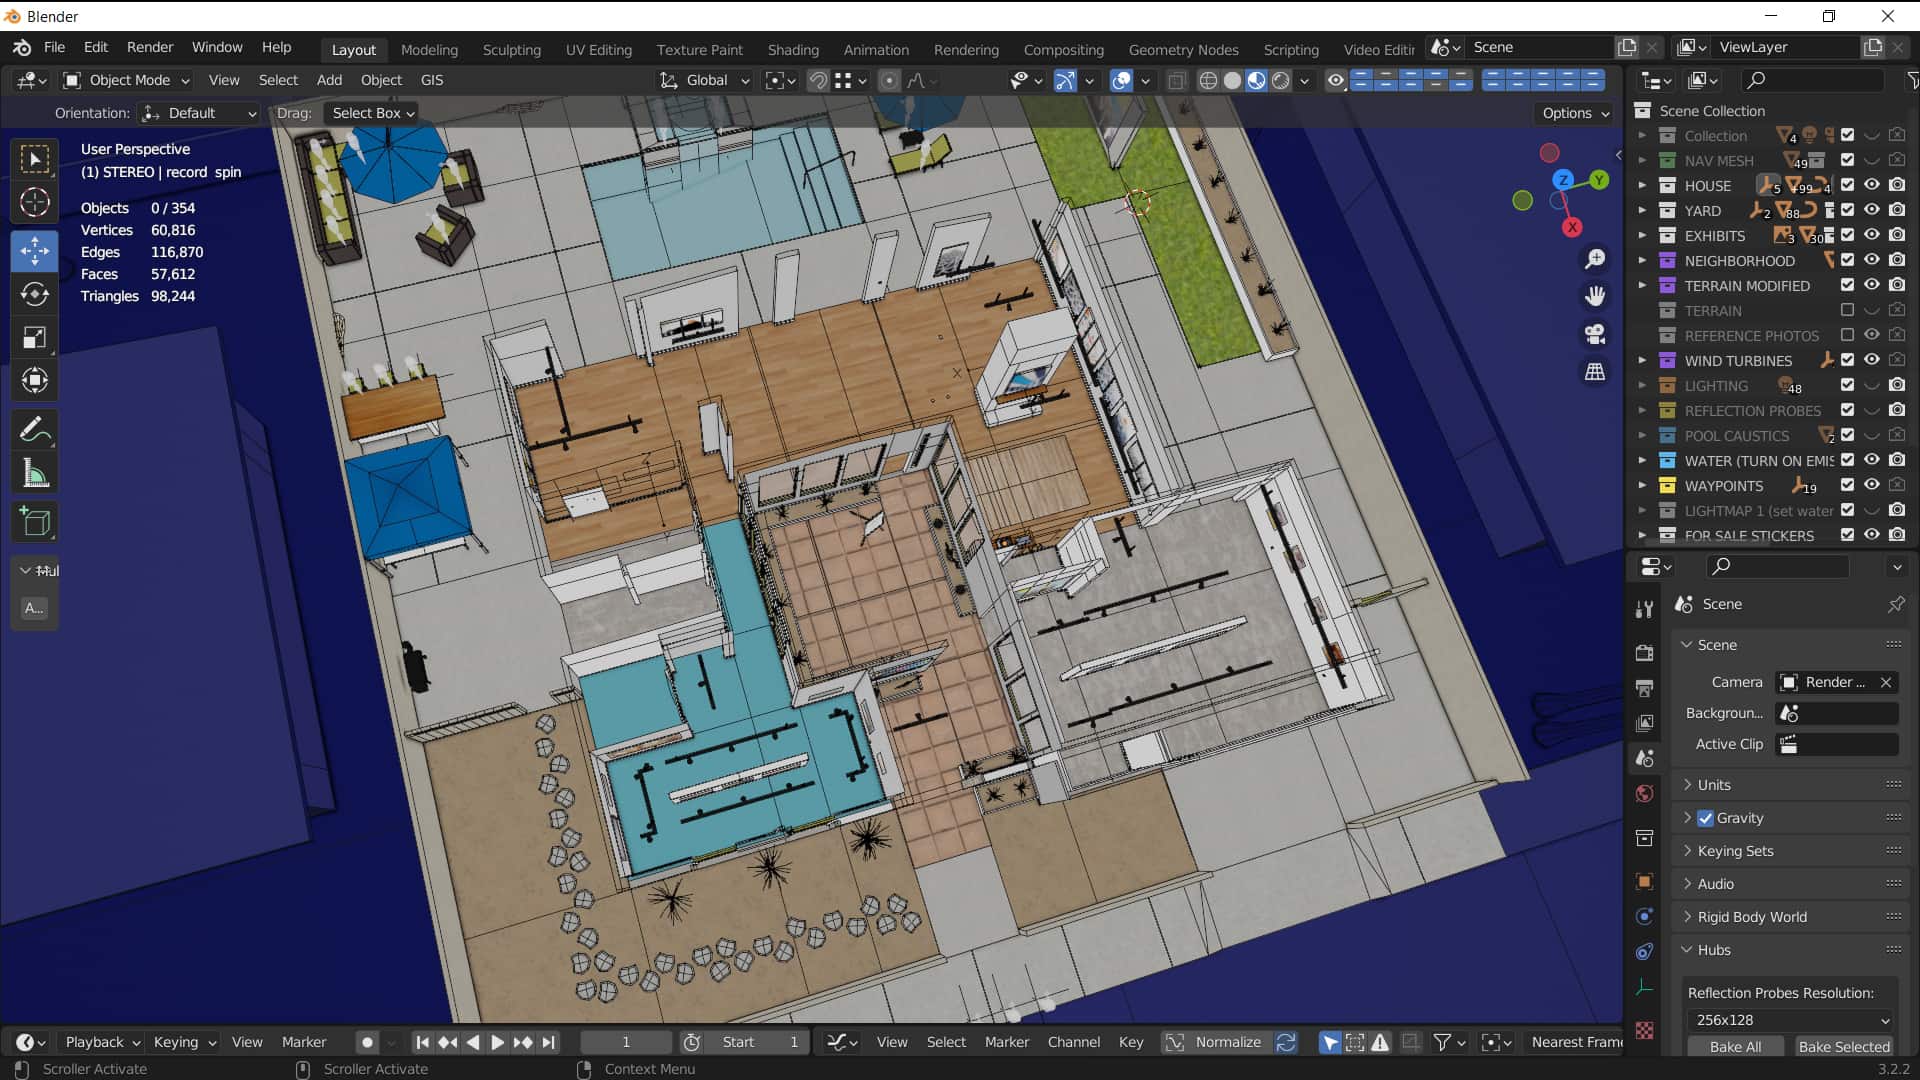 A Blender screenshot showcasing the Codezart home from an aerial perspective.